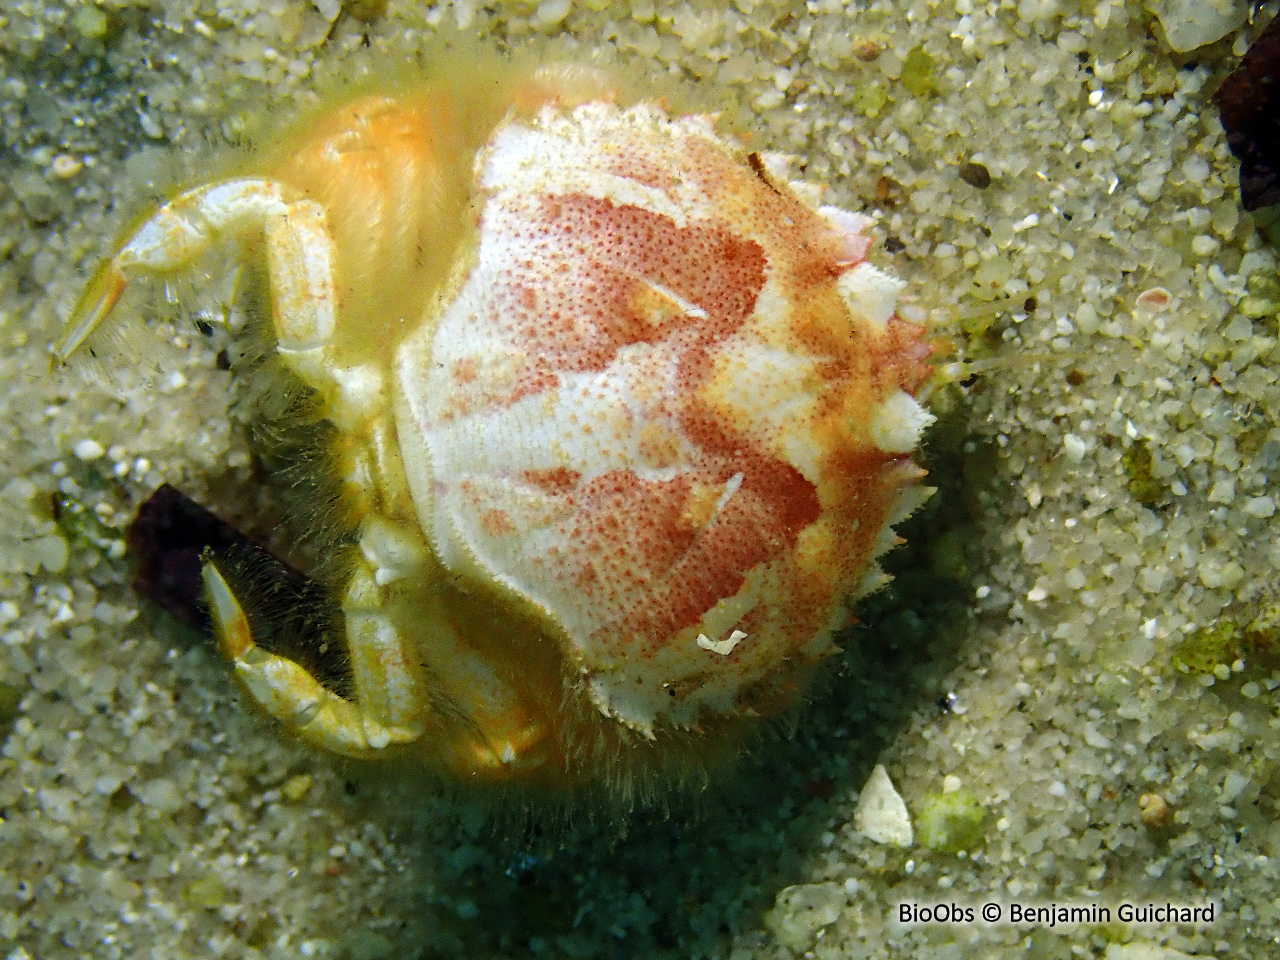 Grand crabe circulaire - Atelecyclus undecimdentatus - Benjamin Guichard - BioObs